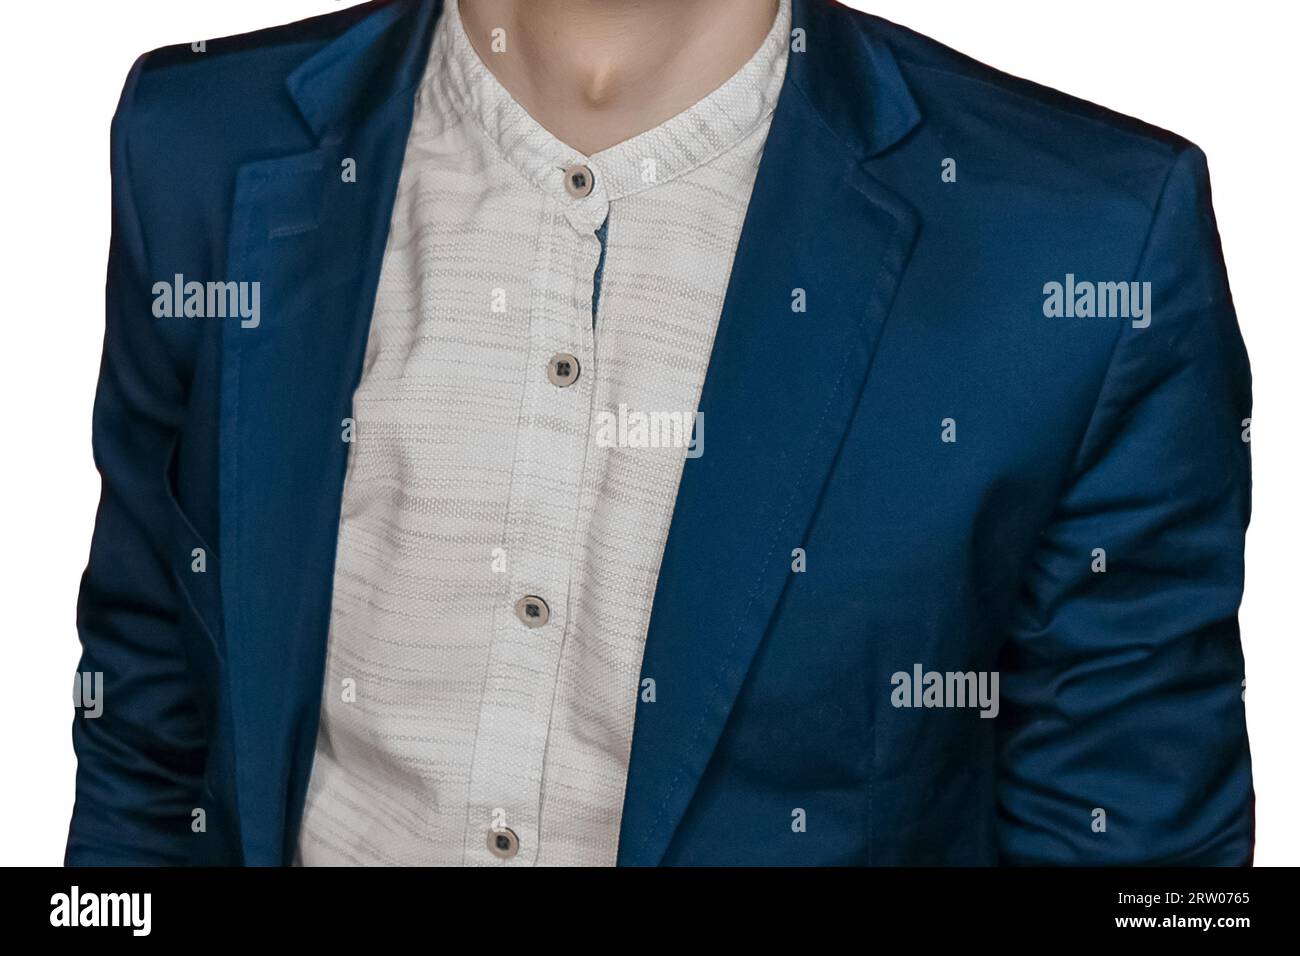 Men's business style clothing fashion vintage light shirt and blue jacket on white background isolated, close up. Stock Photo